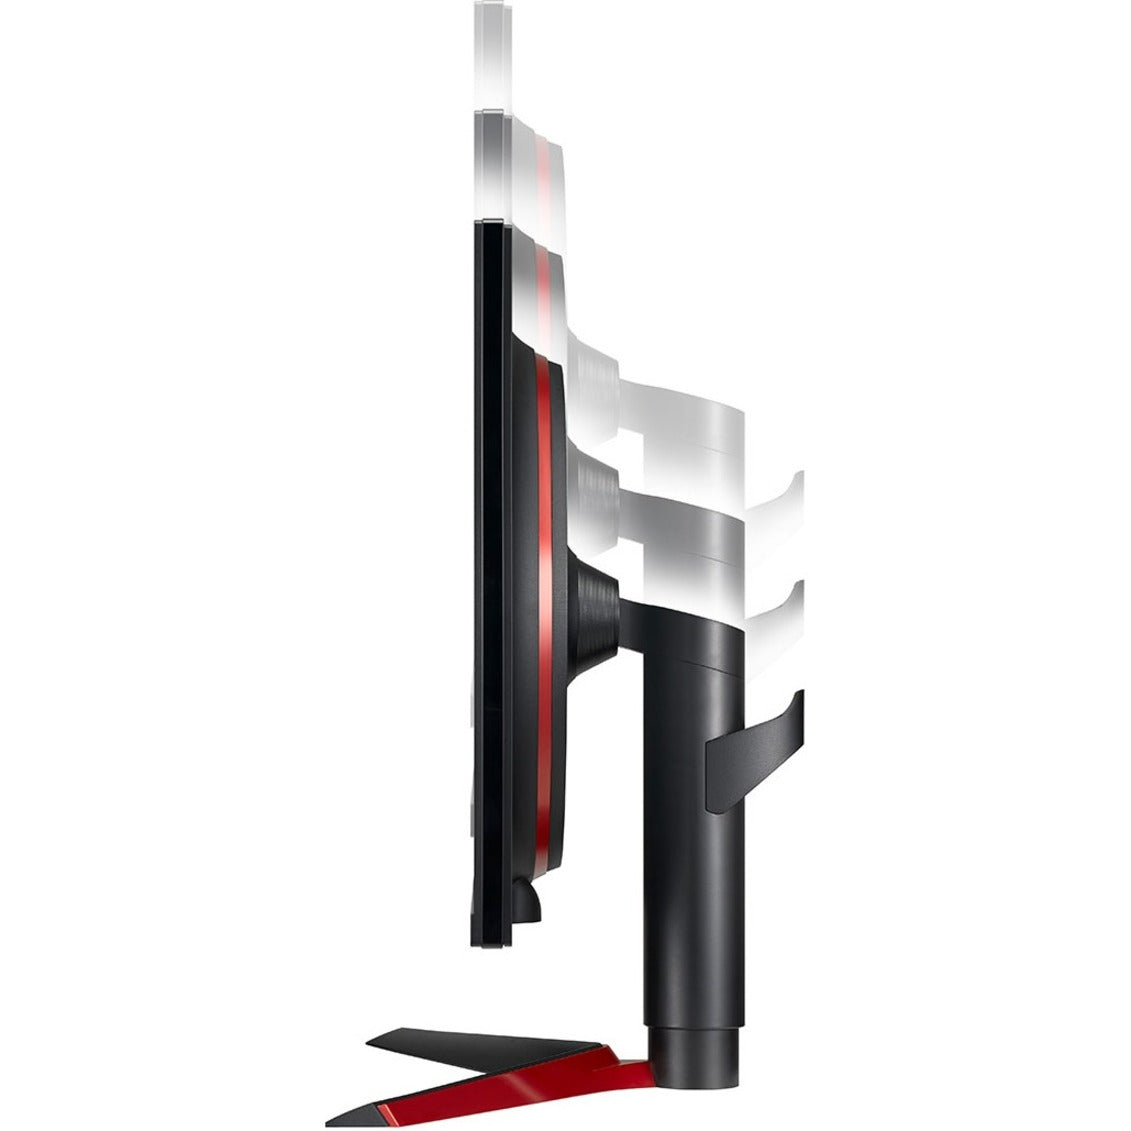 LG UltraGear 27GN75B-B 27" Full HD Gaming LCD Monitor - 16:9 - Black Red